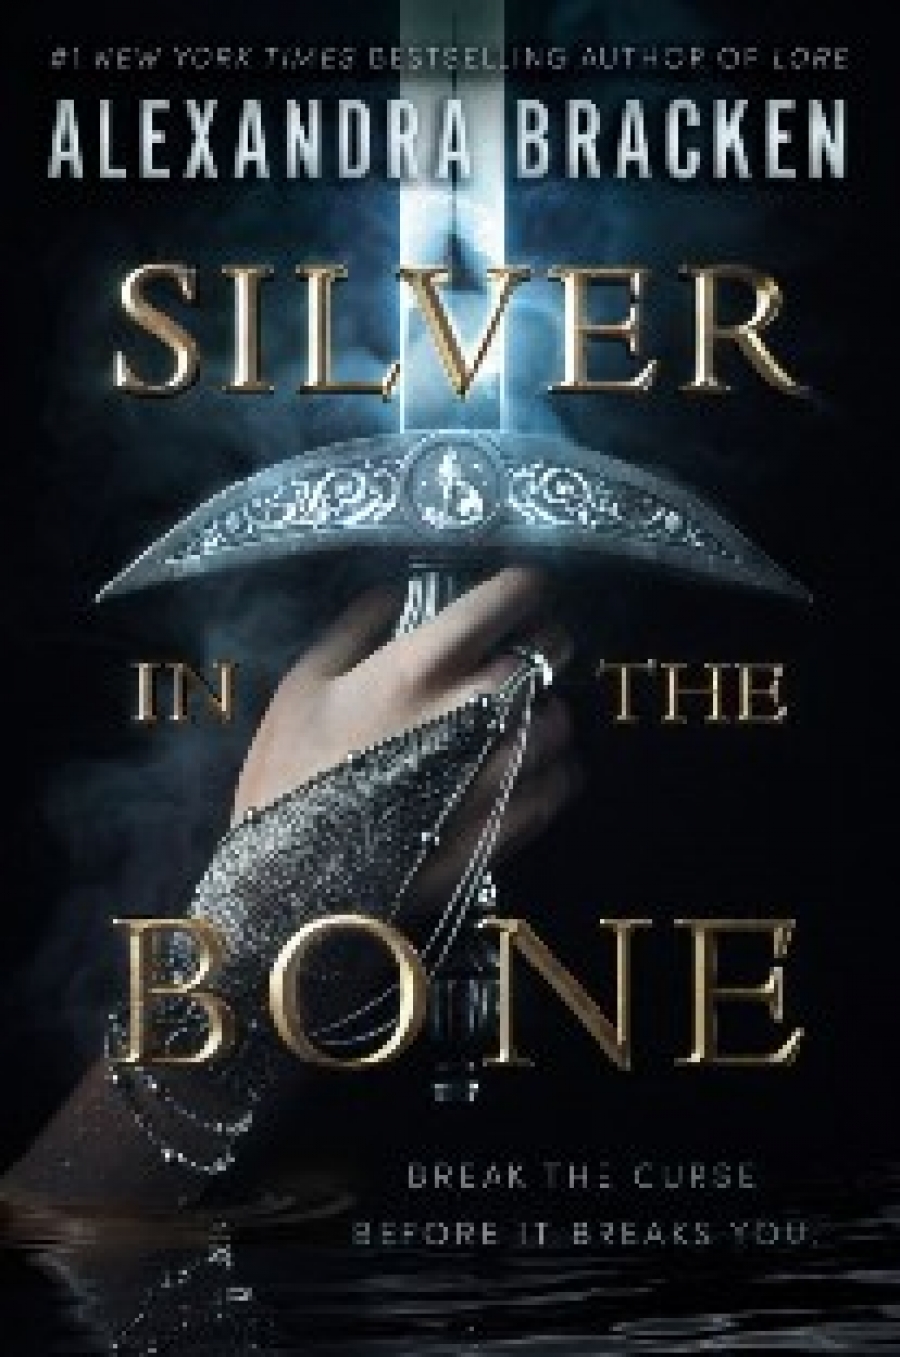 Alexandra, Bracken Silver in the bone 